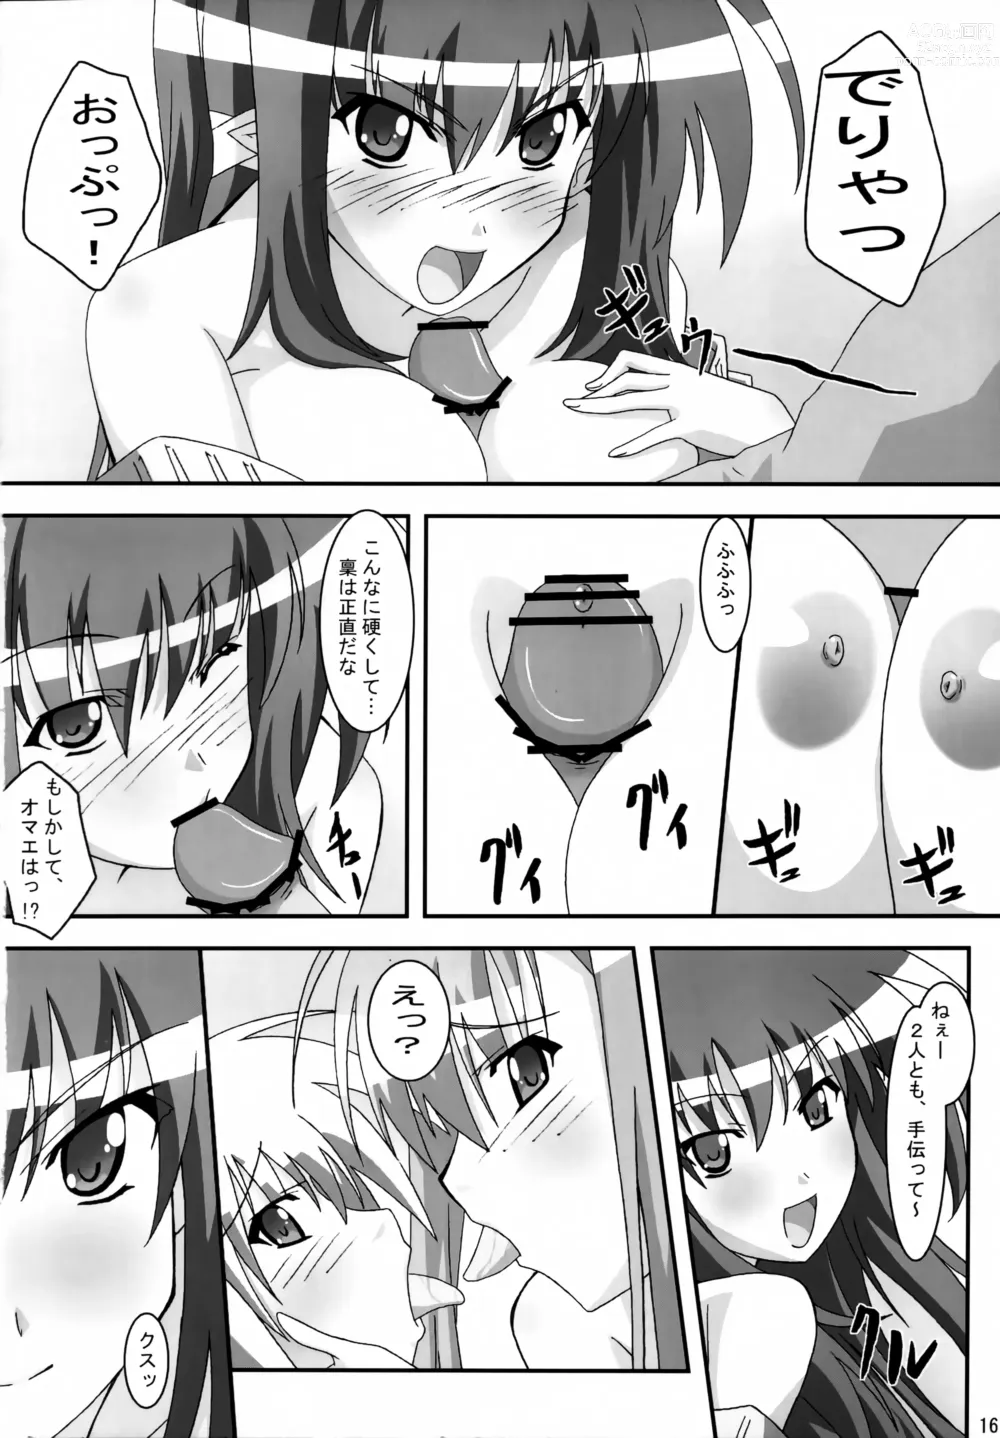 Page 15 of doujinshi SHUFFLE! With